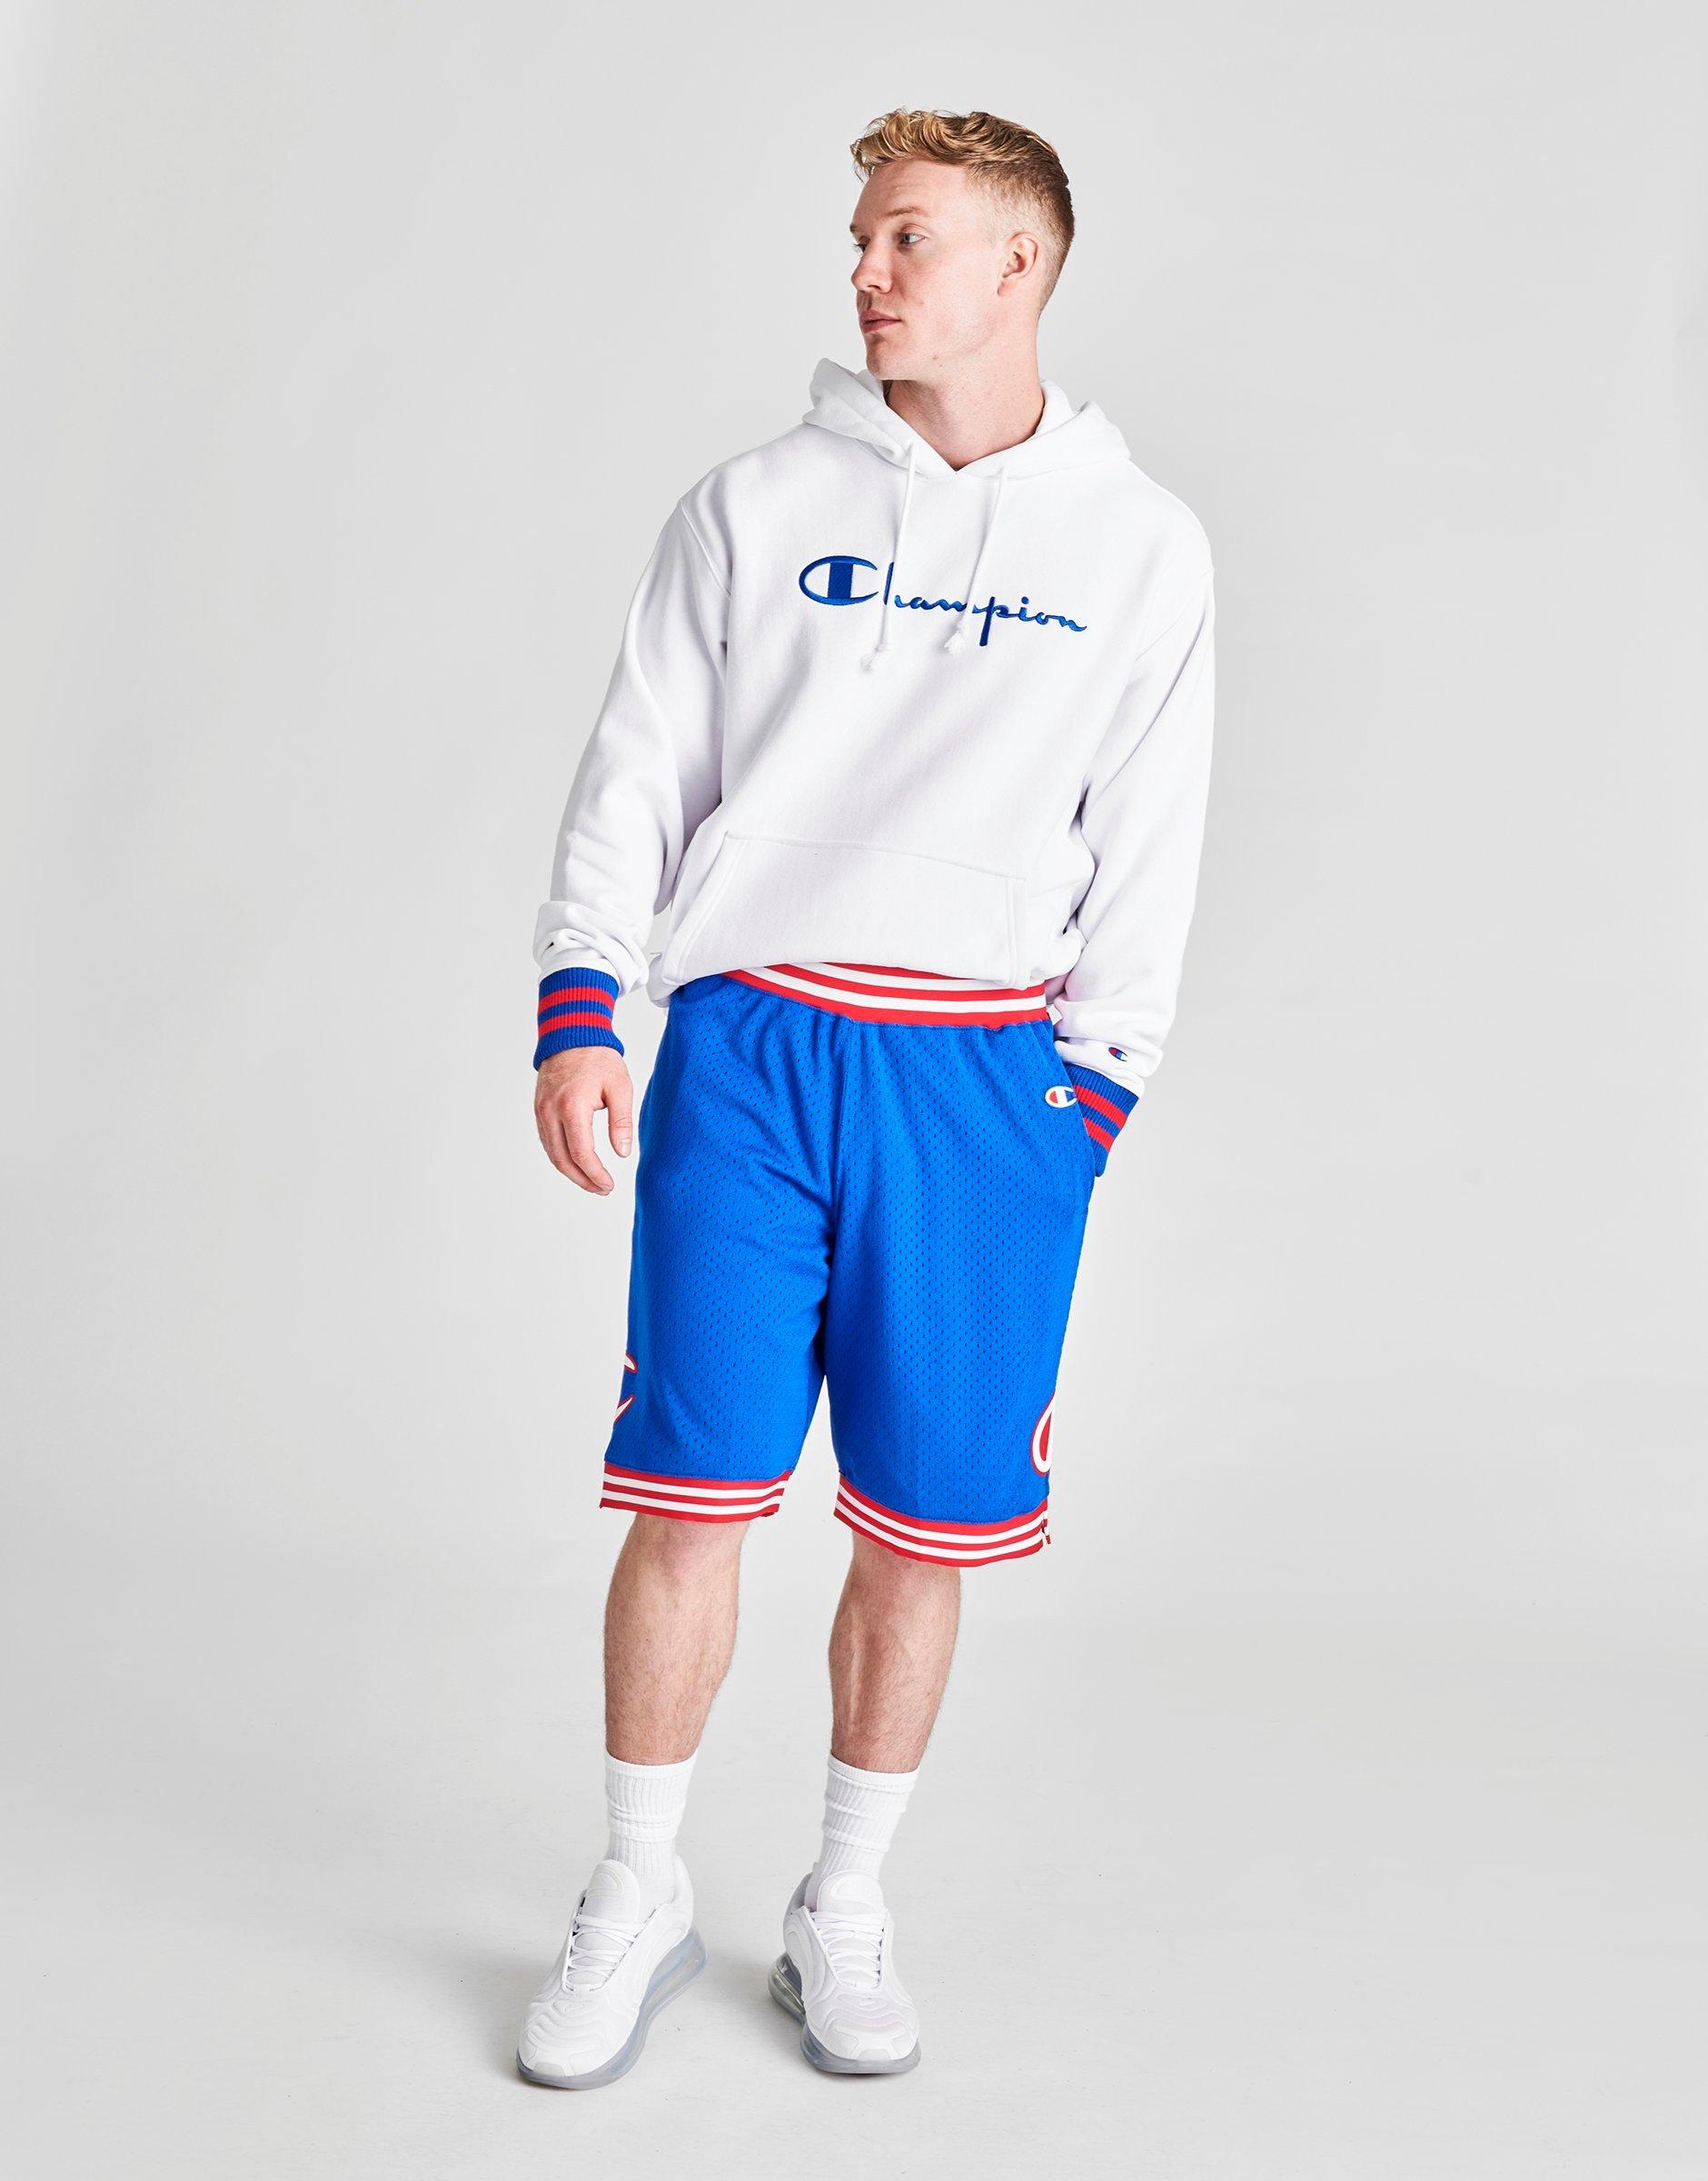 men's champion mesh shorts